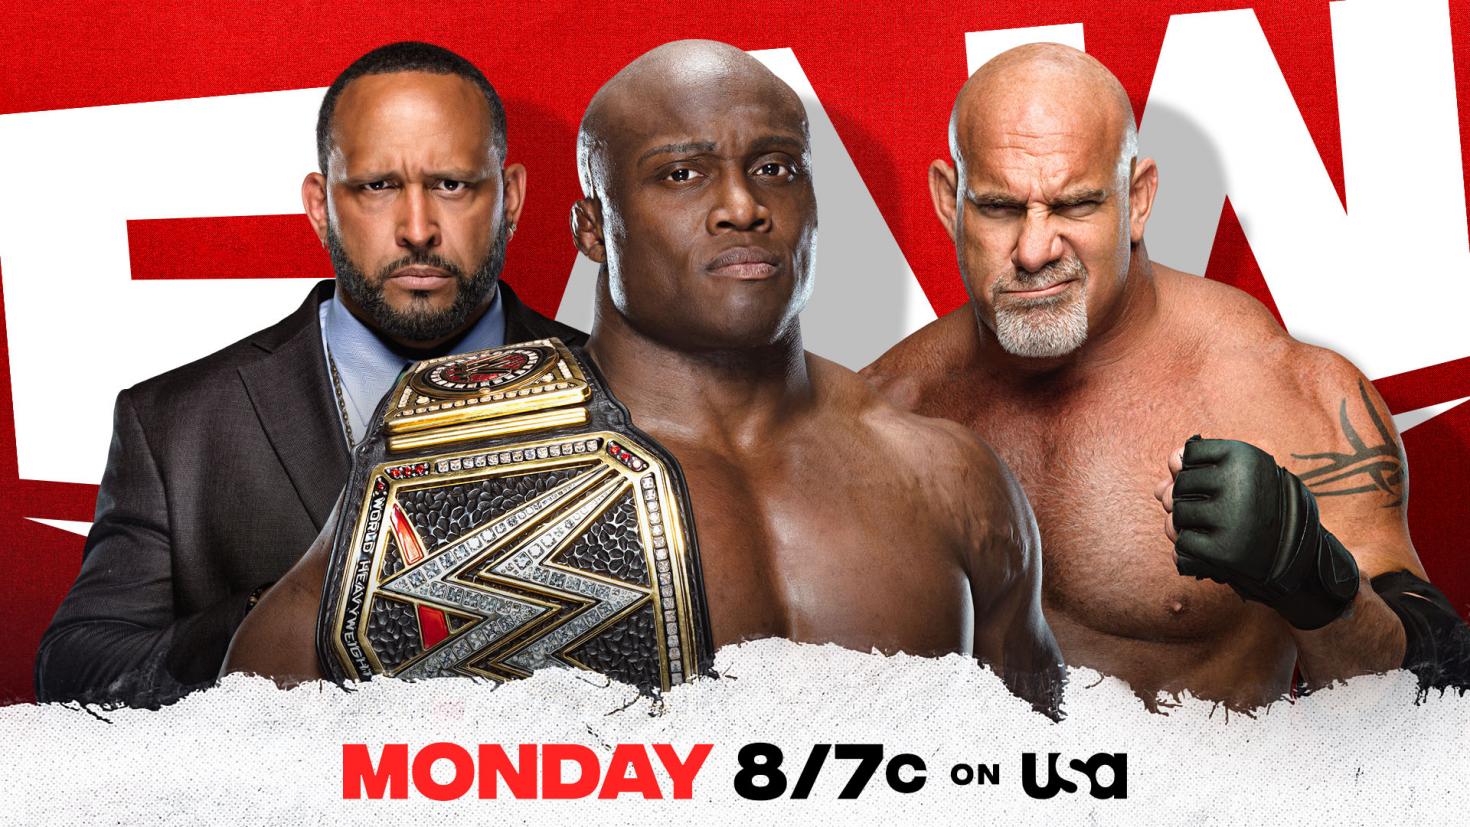 WWE Raw Preview: Lashley to respond to Goldberg